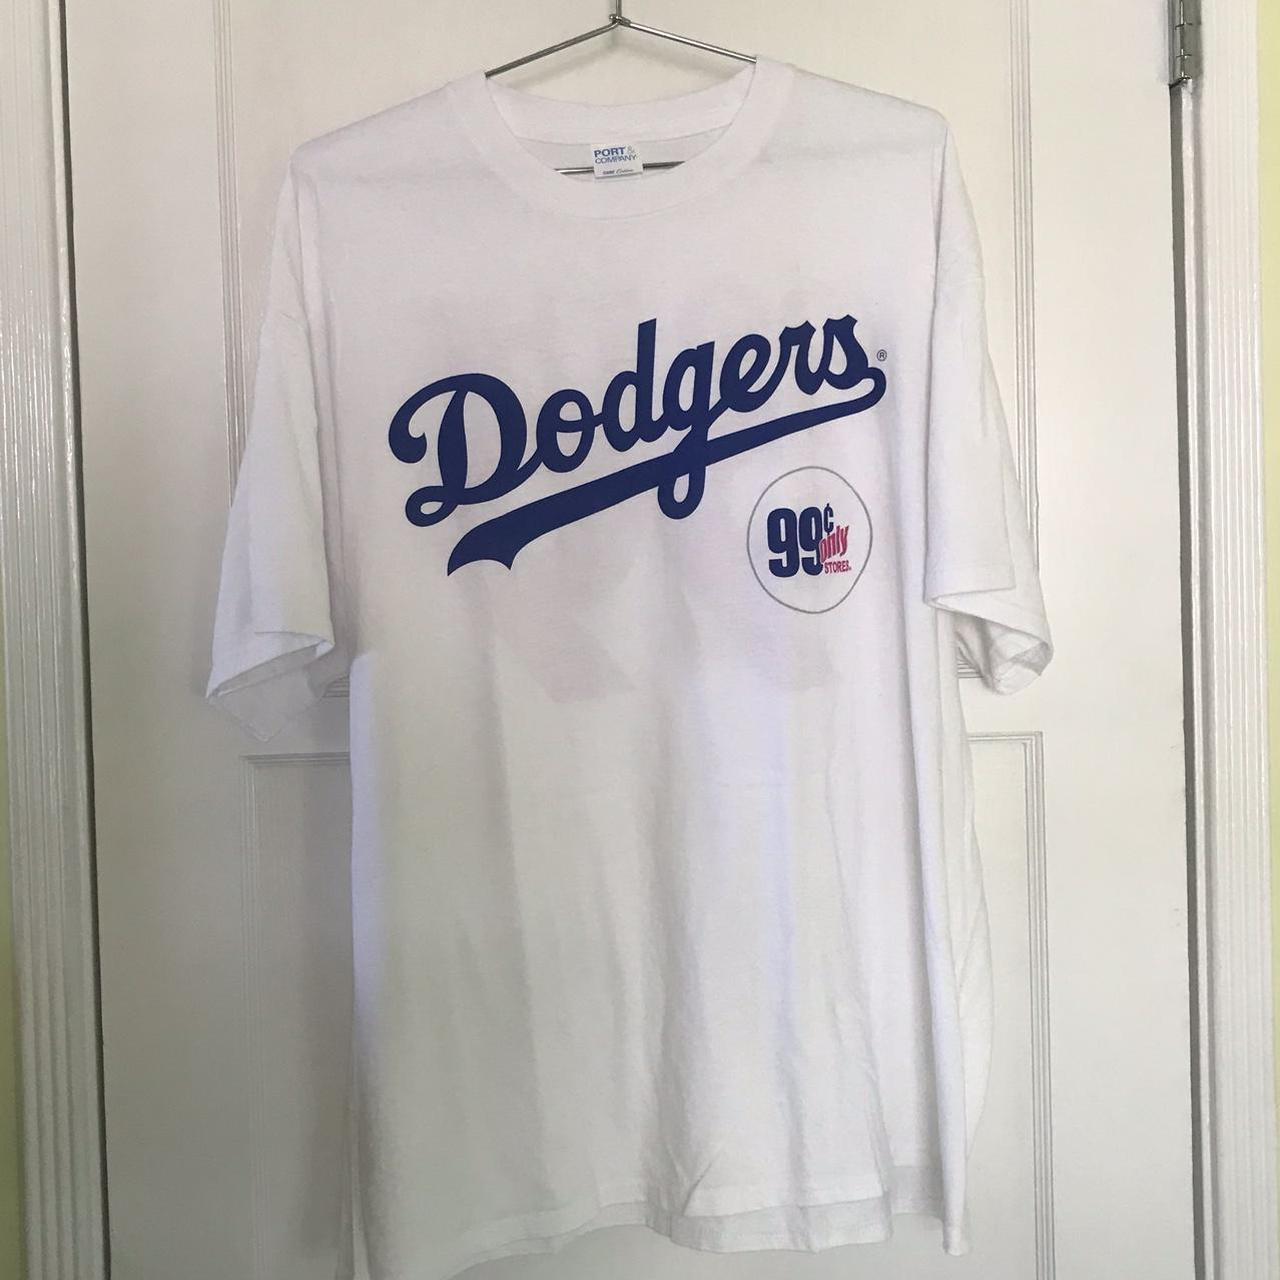 Dodgers x 99 Cents store promotional t shirt “Do - Depop